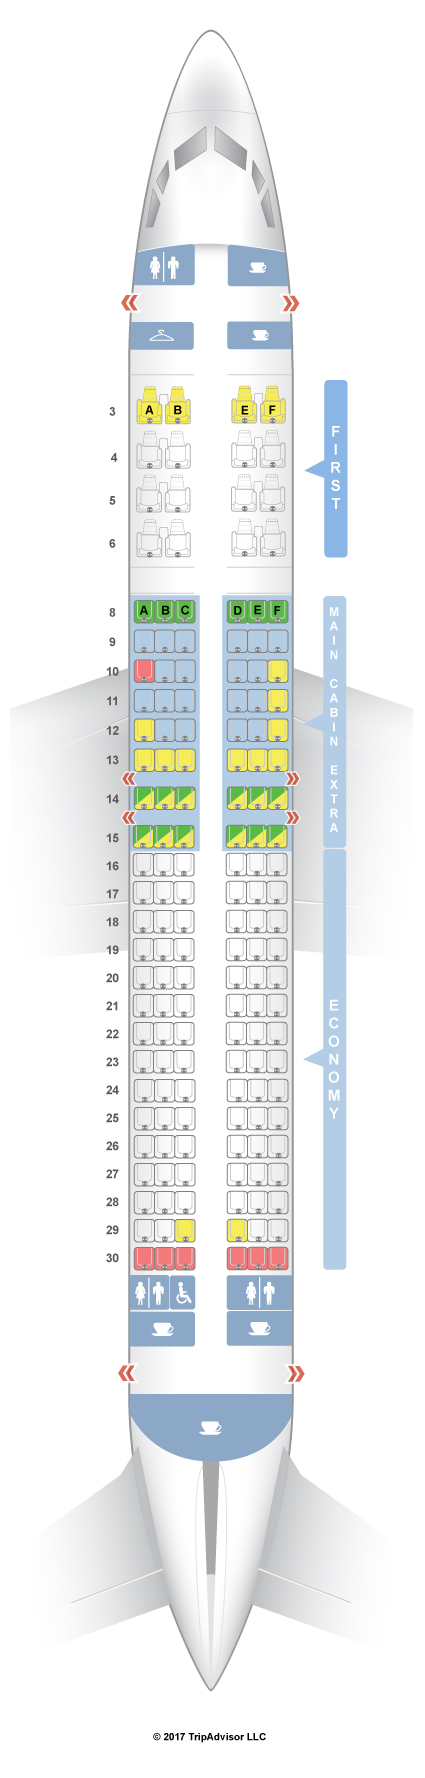 Us Airways 757 Seating Chart